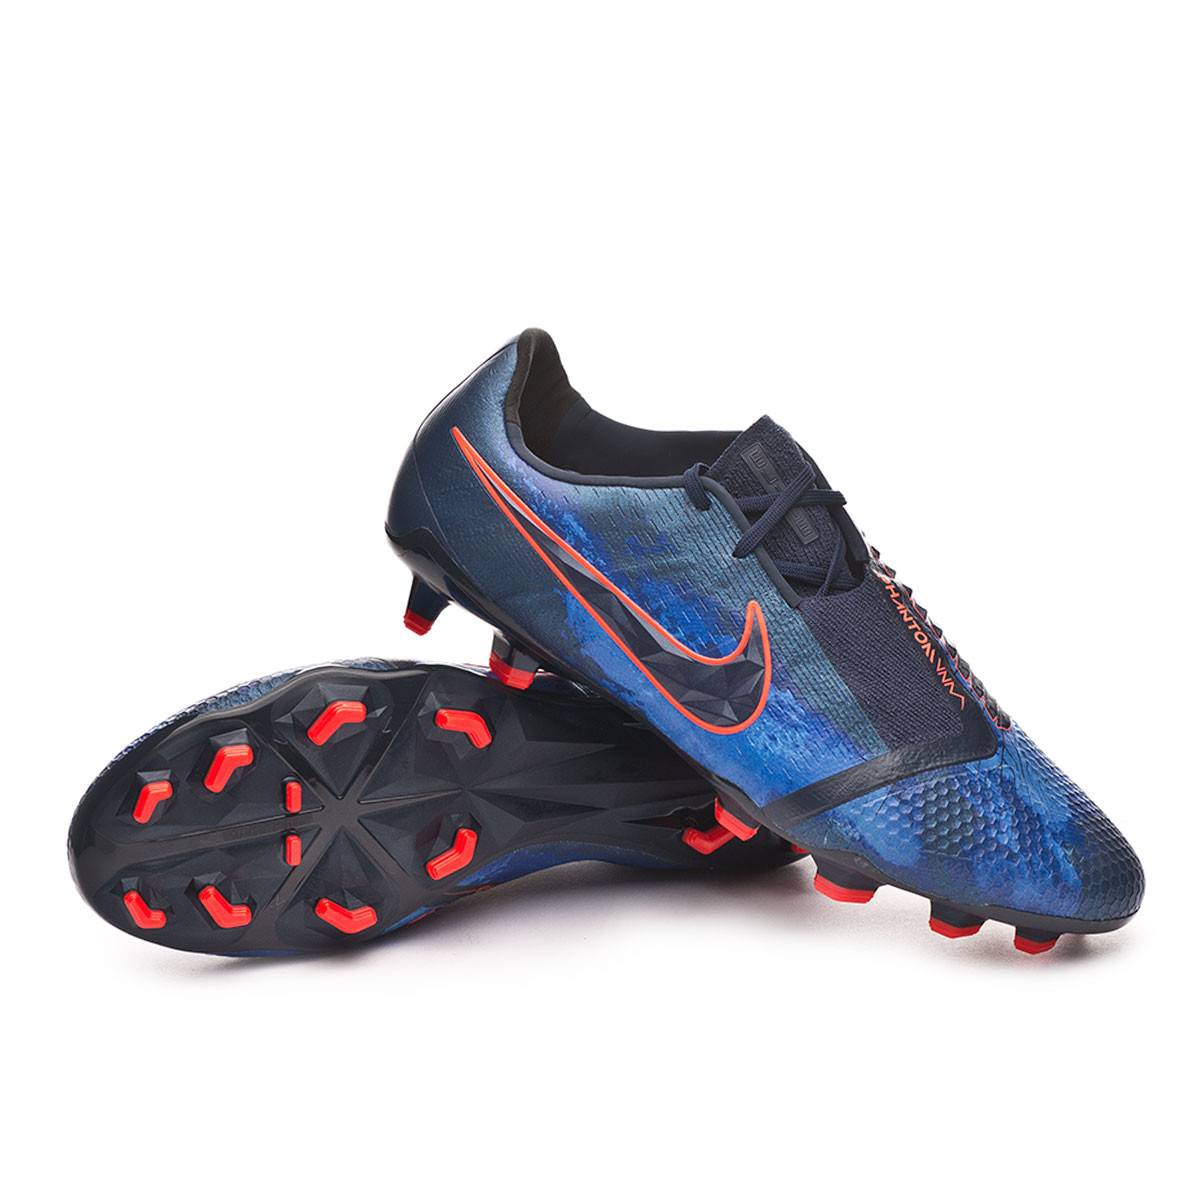 Football Boots Nike Phantom Venom Elite FG Obsidian-White-Black-Racer blue  - Football store Fútbol Emotion